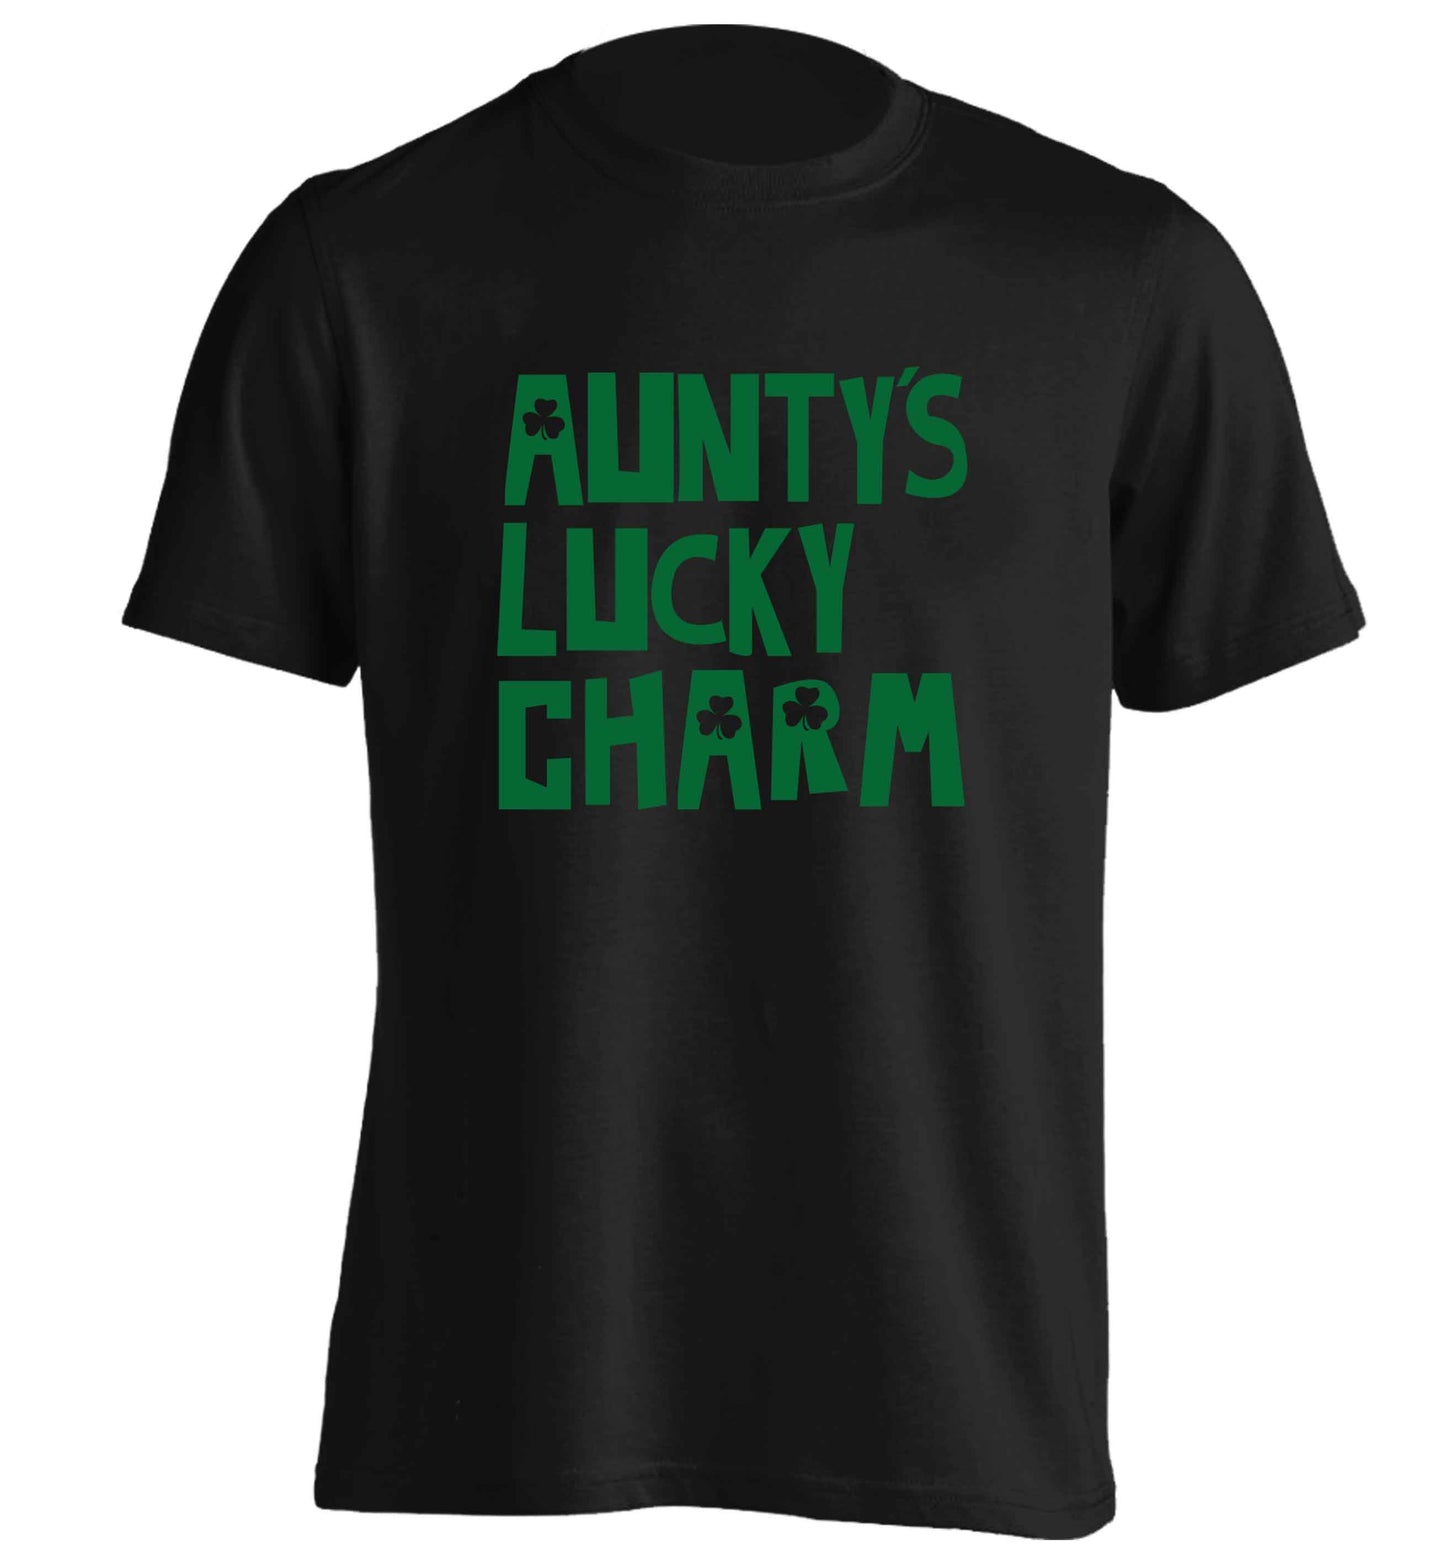 Aunty's lucky charm adults unisex black Tshirt 2XL